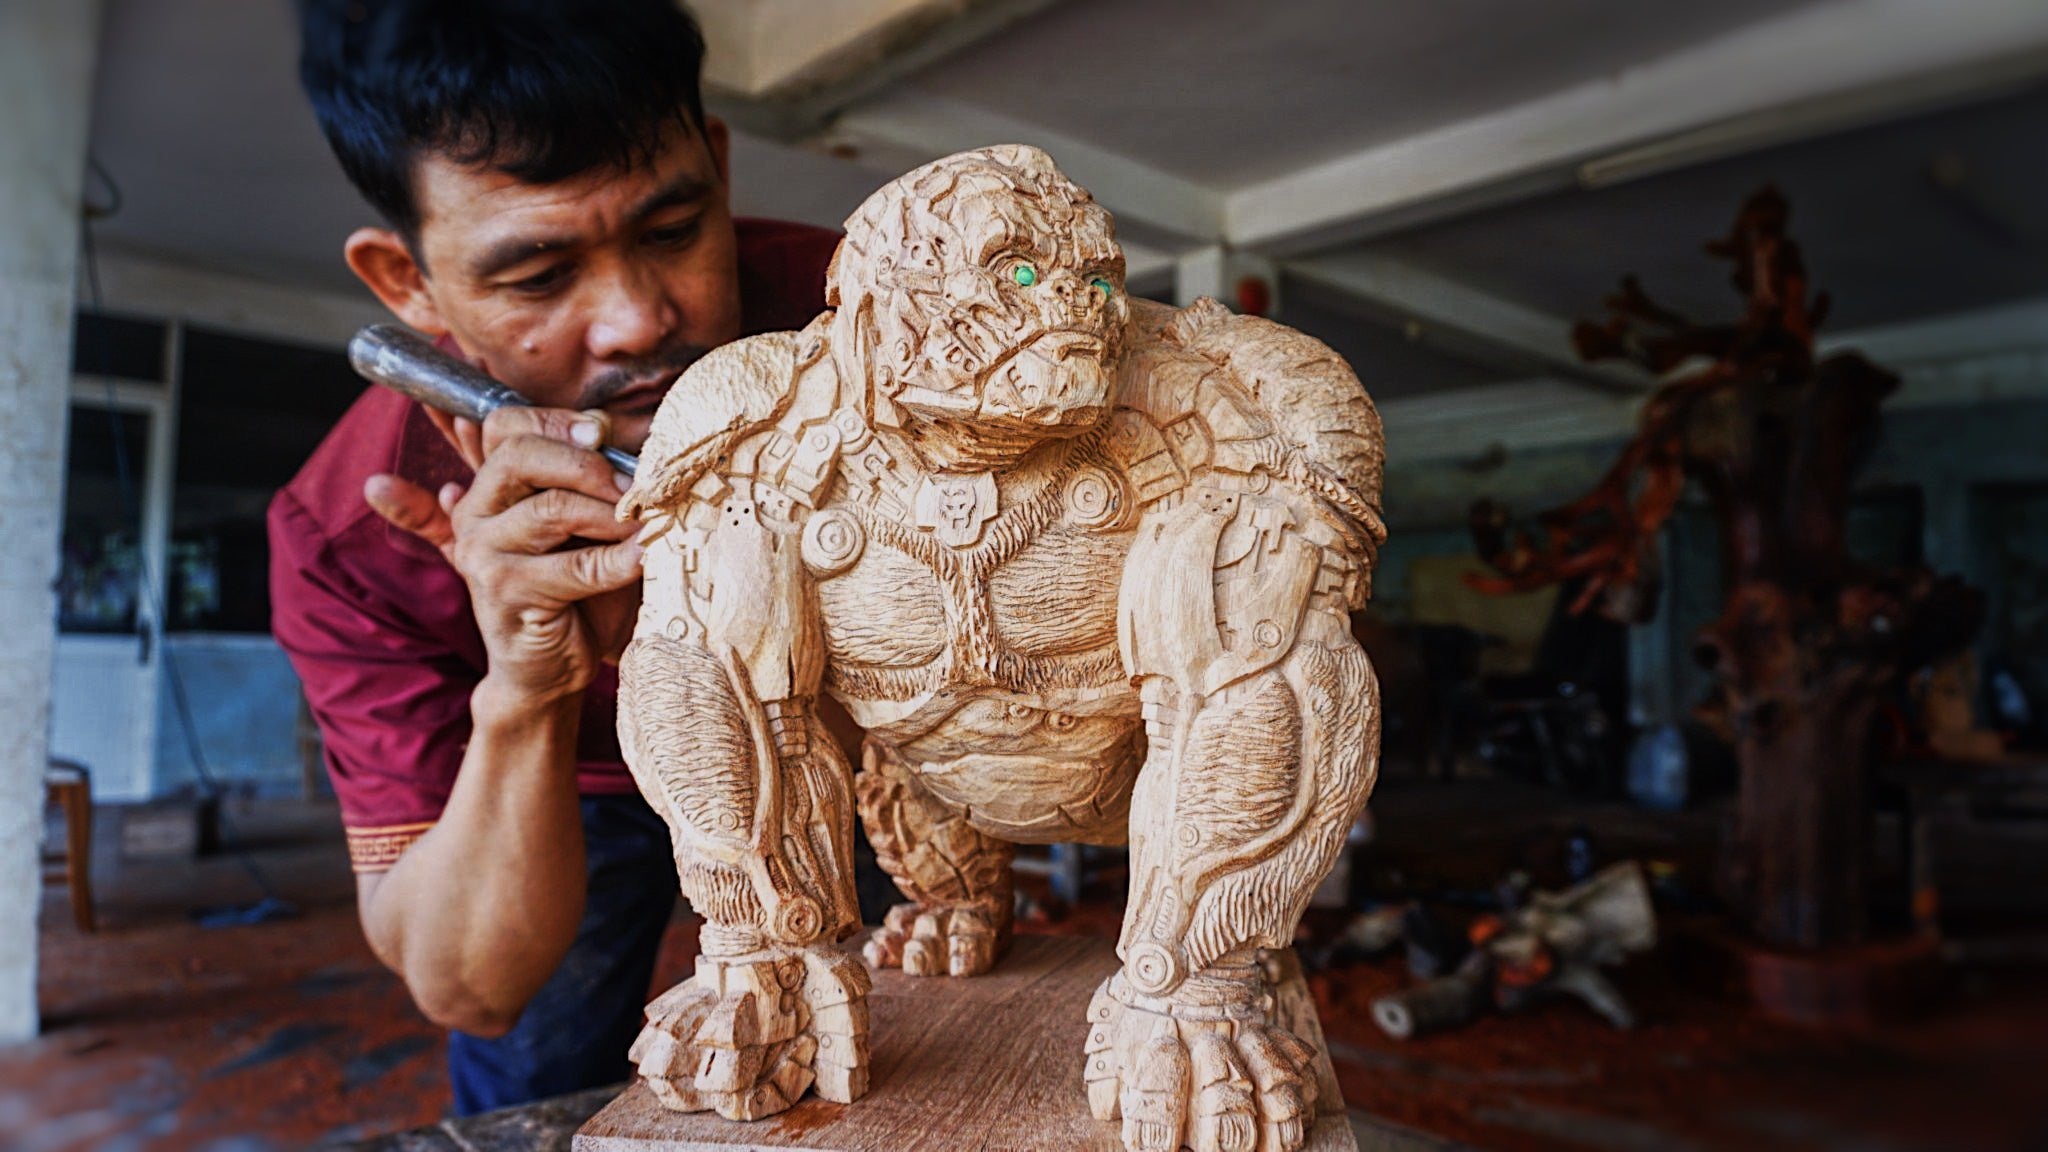 Optimus Primal Figure Wood Carving - Transformers: Rise of the beast